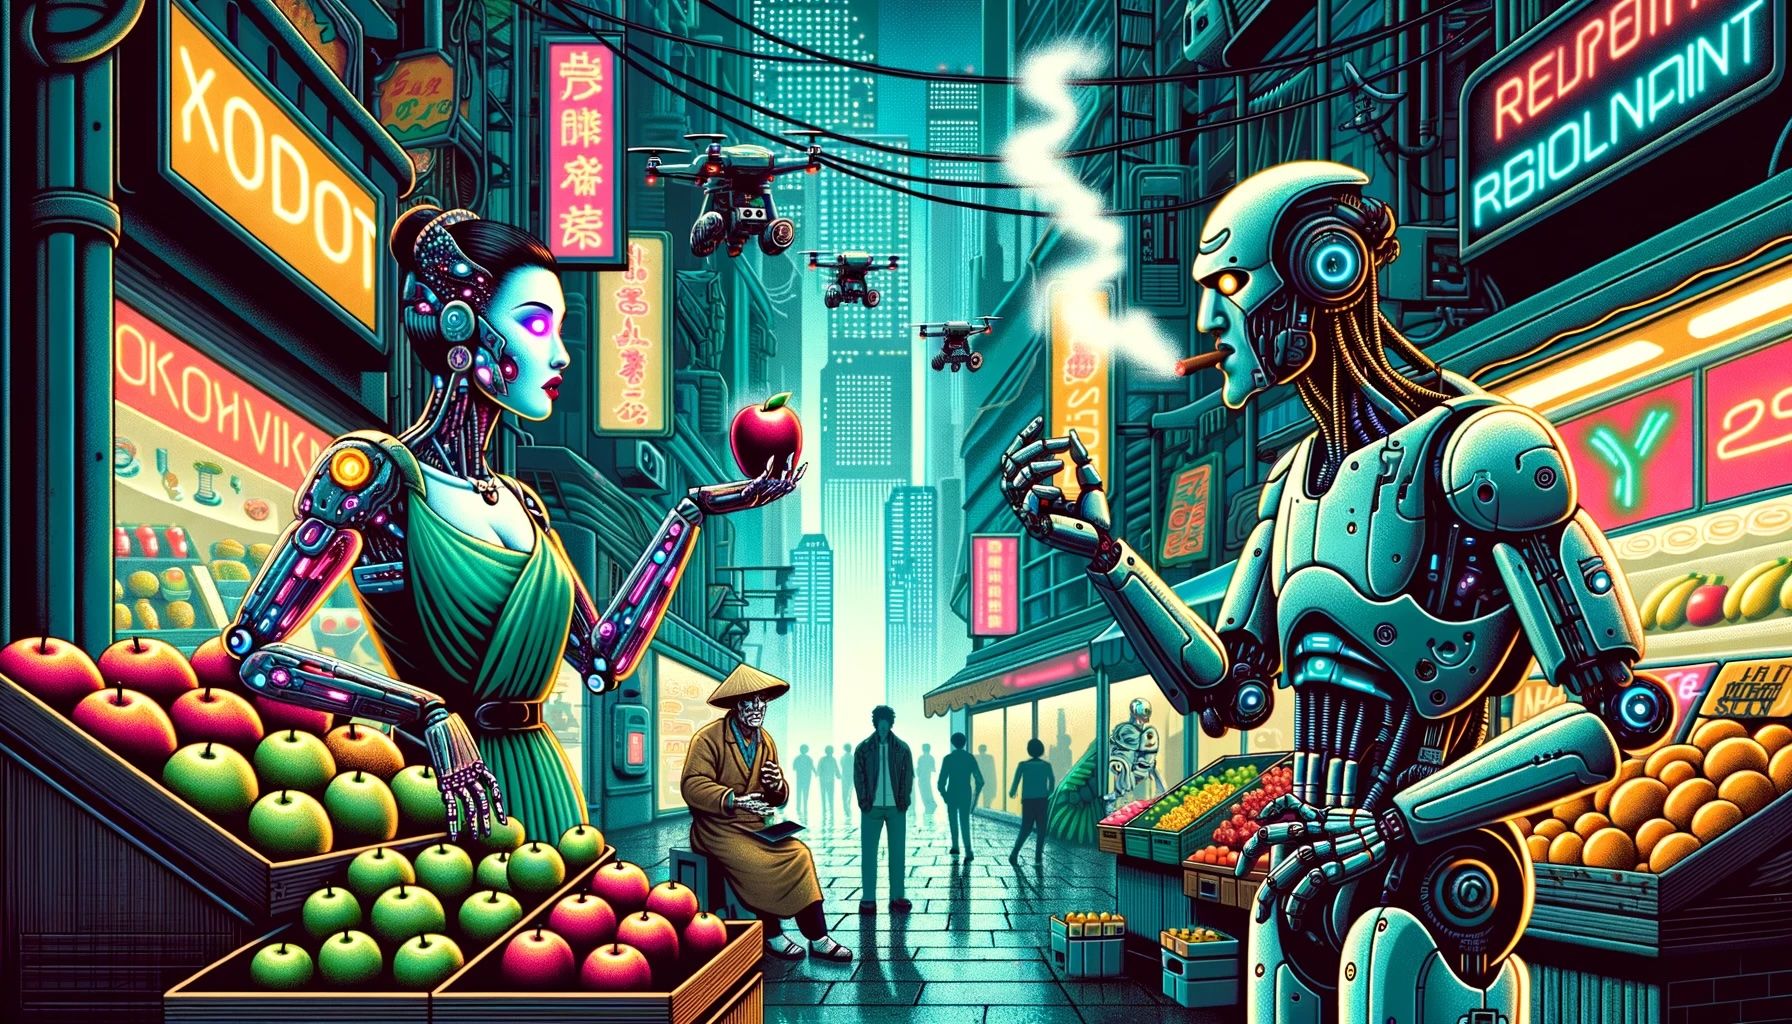 Cyberpunk scene of robot woman buying a fruit from a robot man